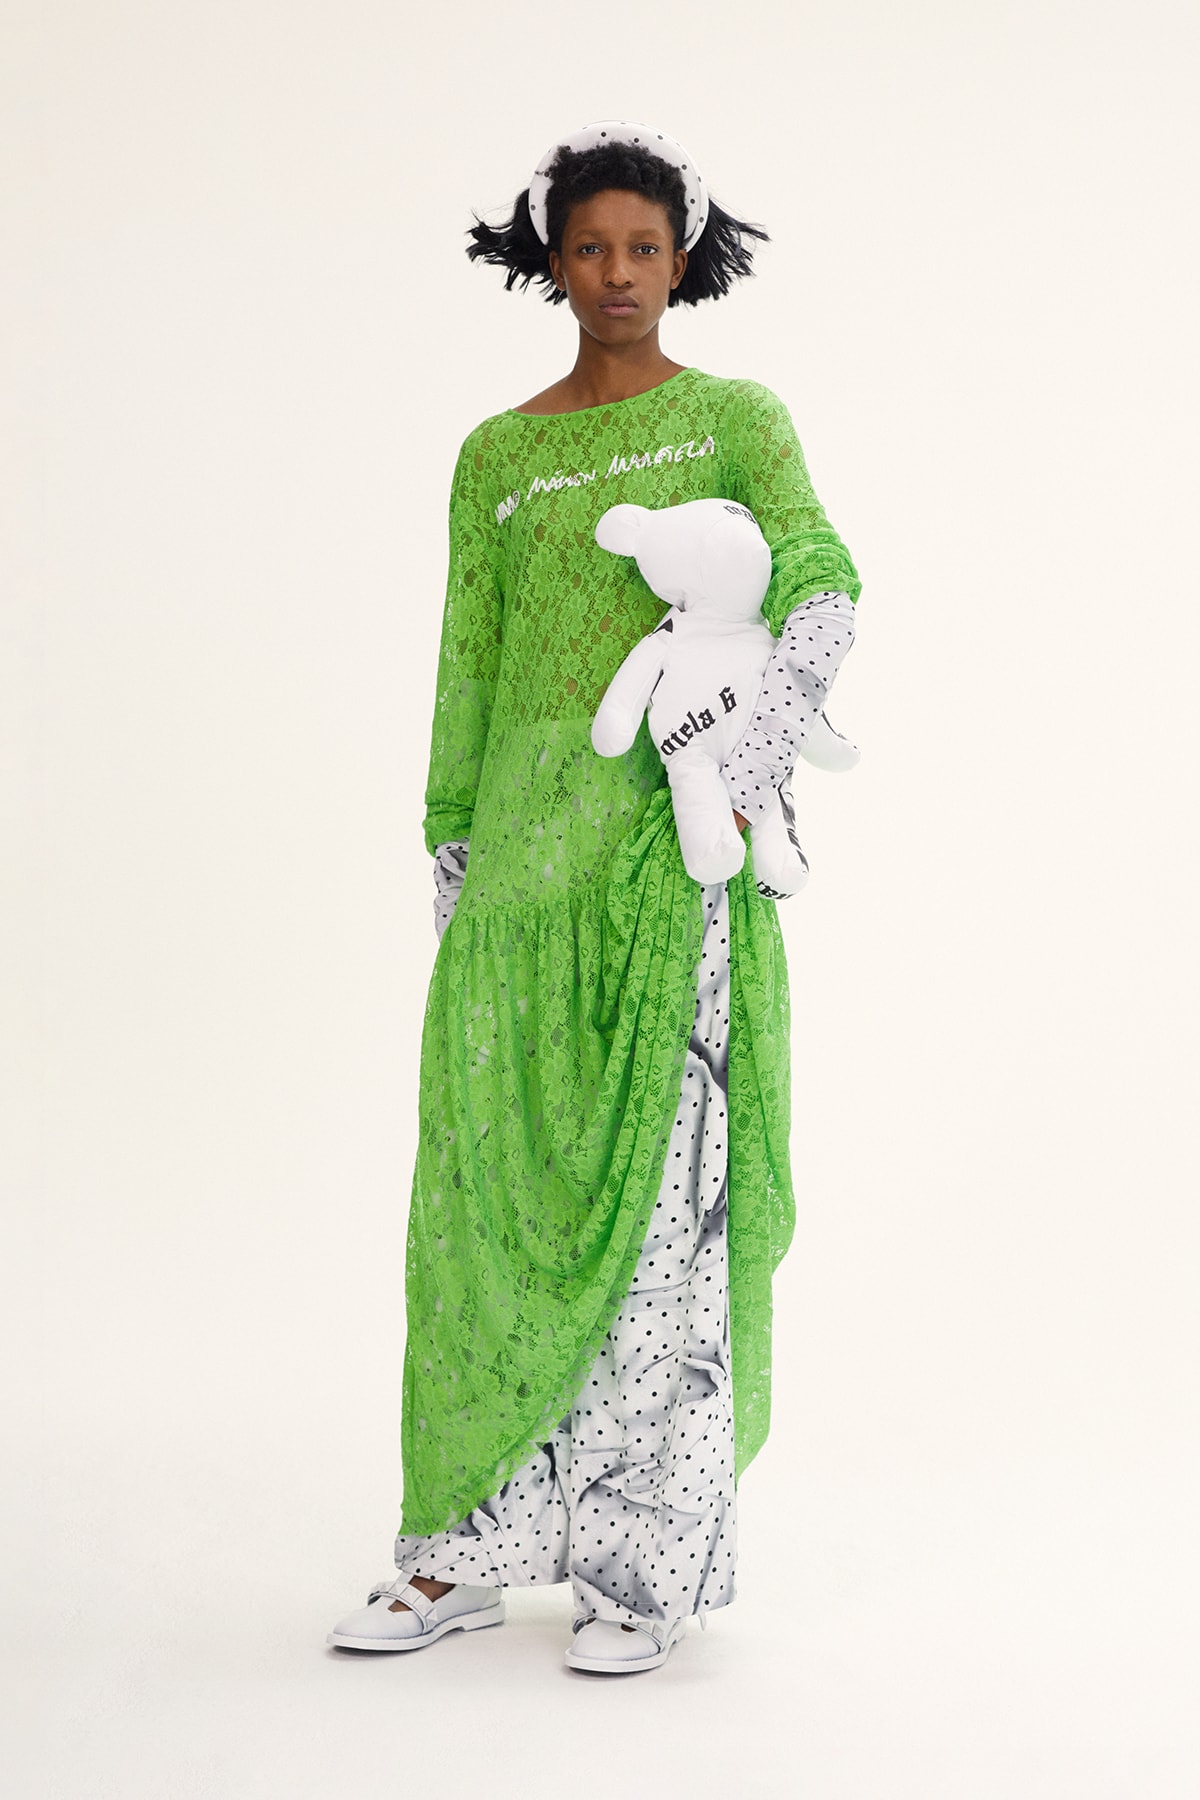 MM6 Maison Margiela Spring/Summer 2020 Collection Lookbook Lace Dress Green Padded Headband